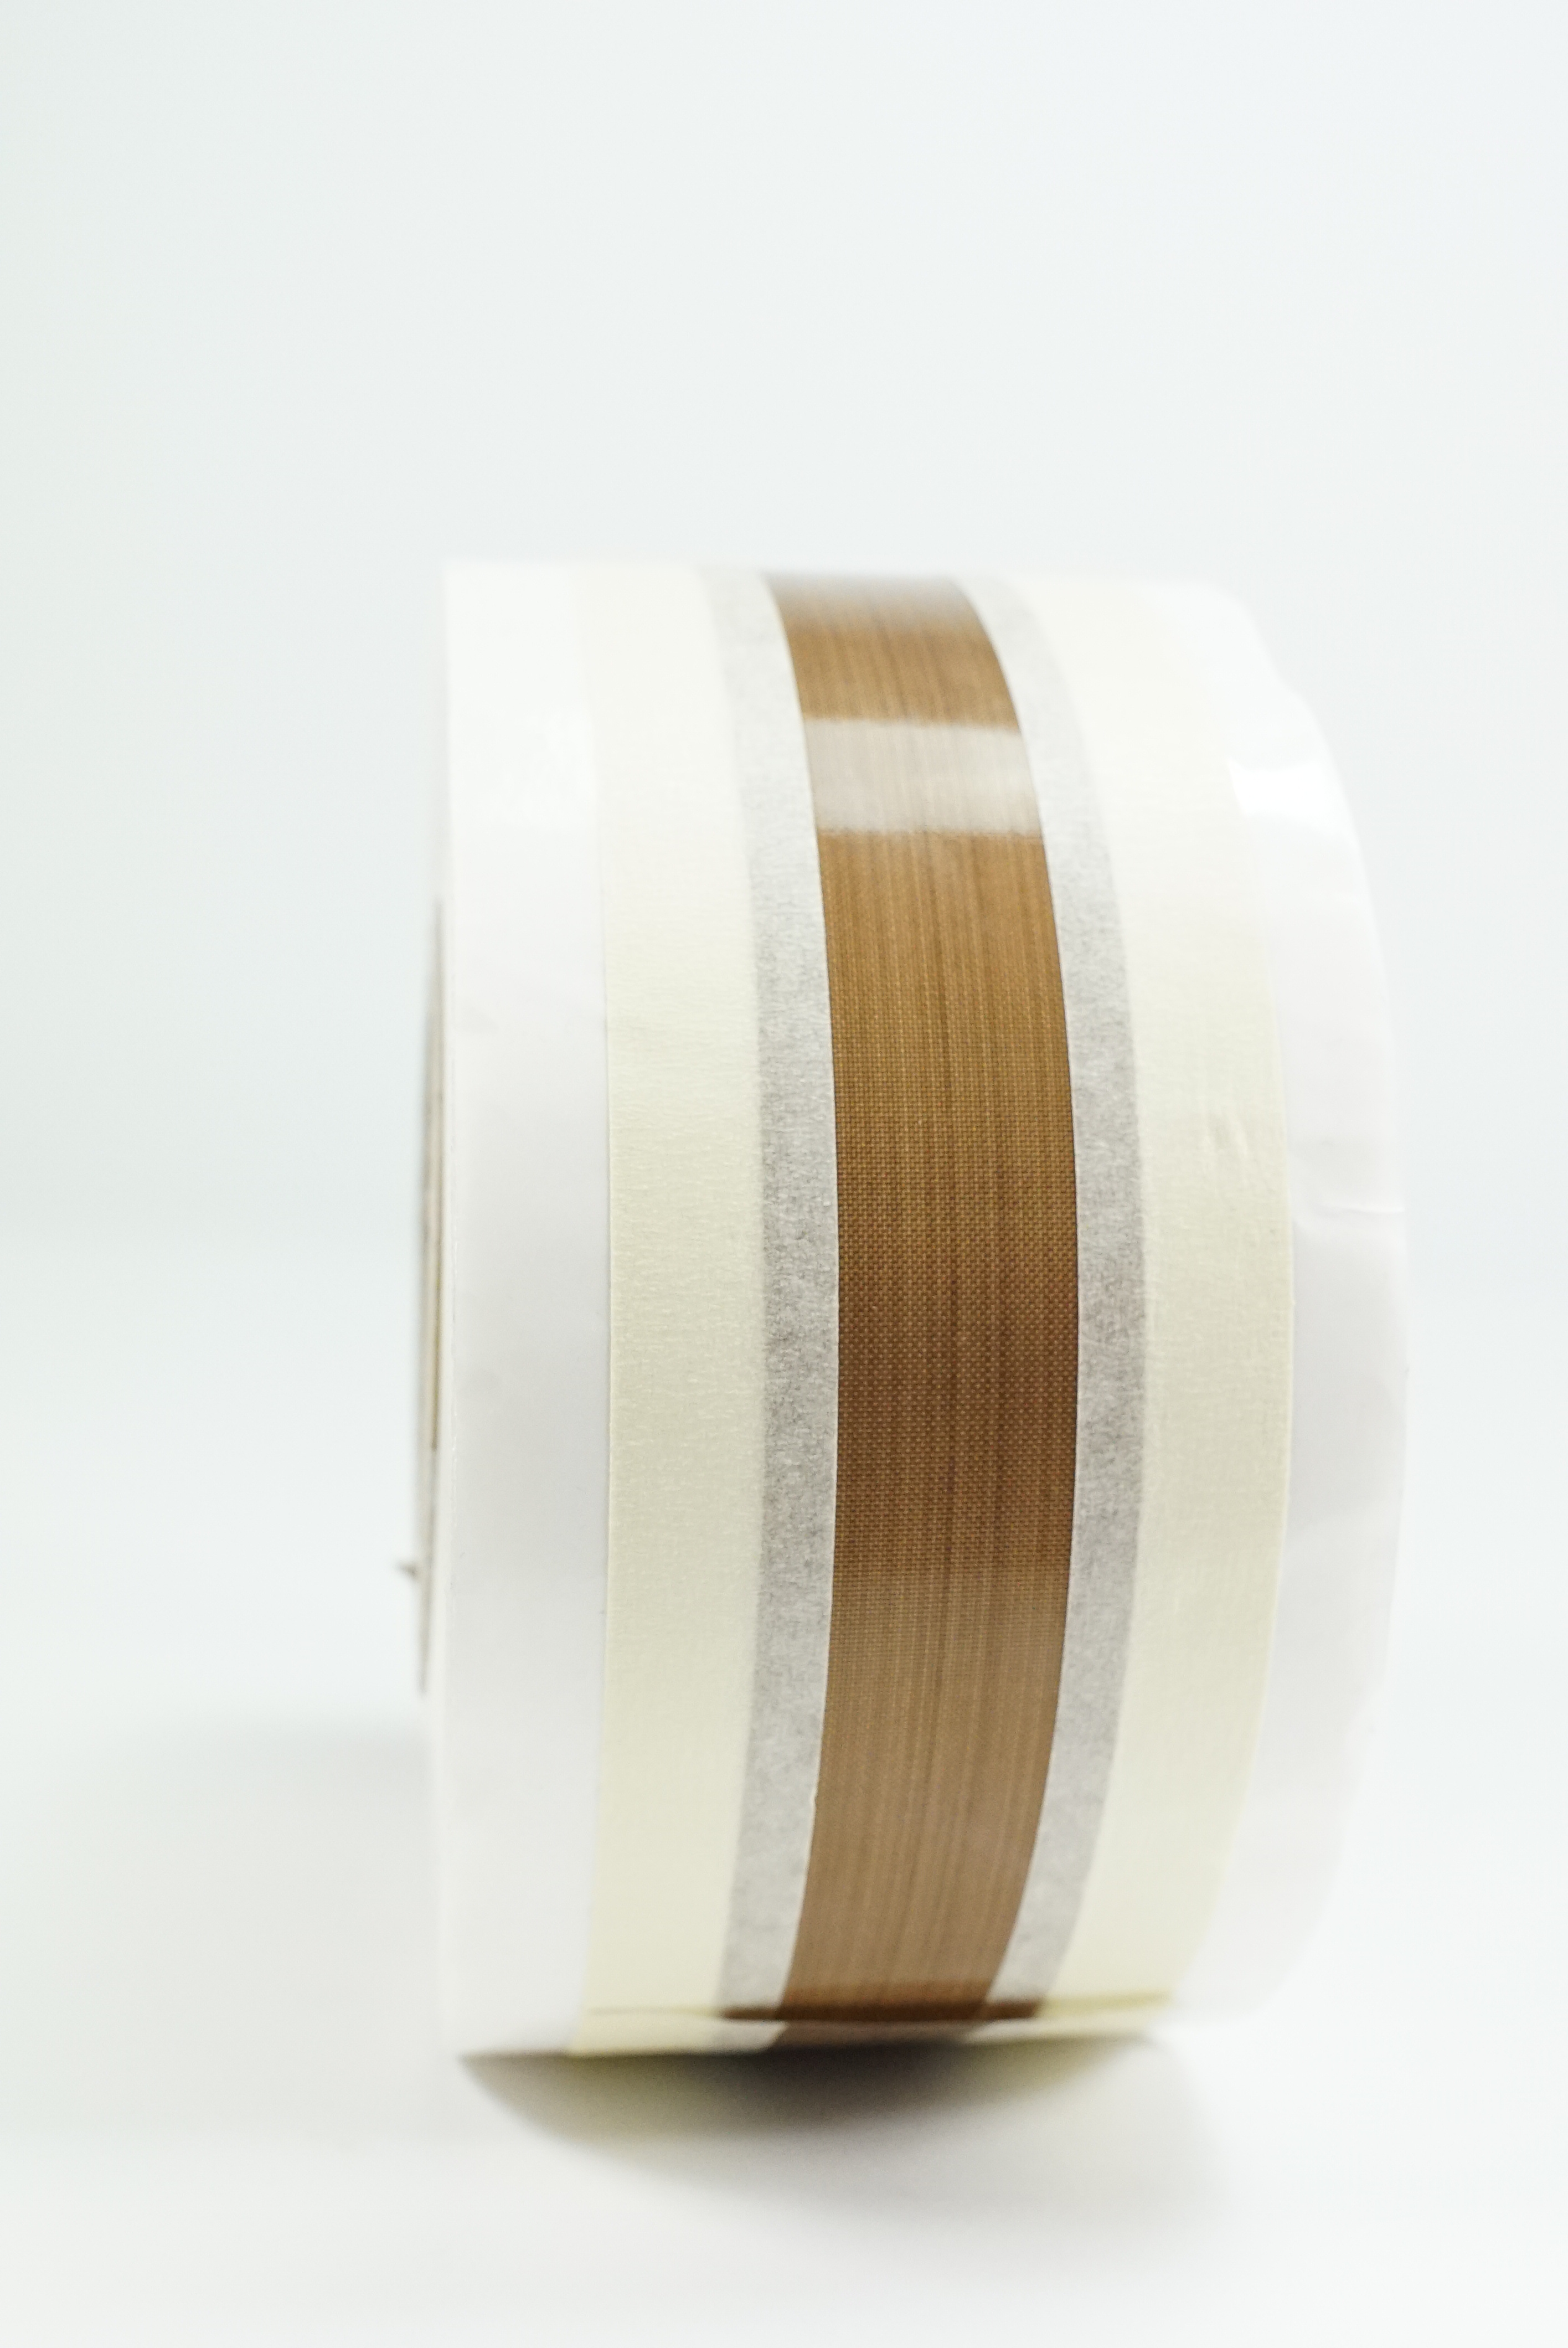 PTFE Klebeband Folie Teflon®Tape Schweissband 0.13 x 30 mm selbstklebend 2 m 